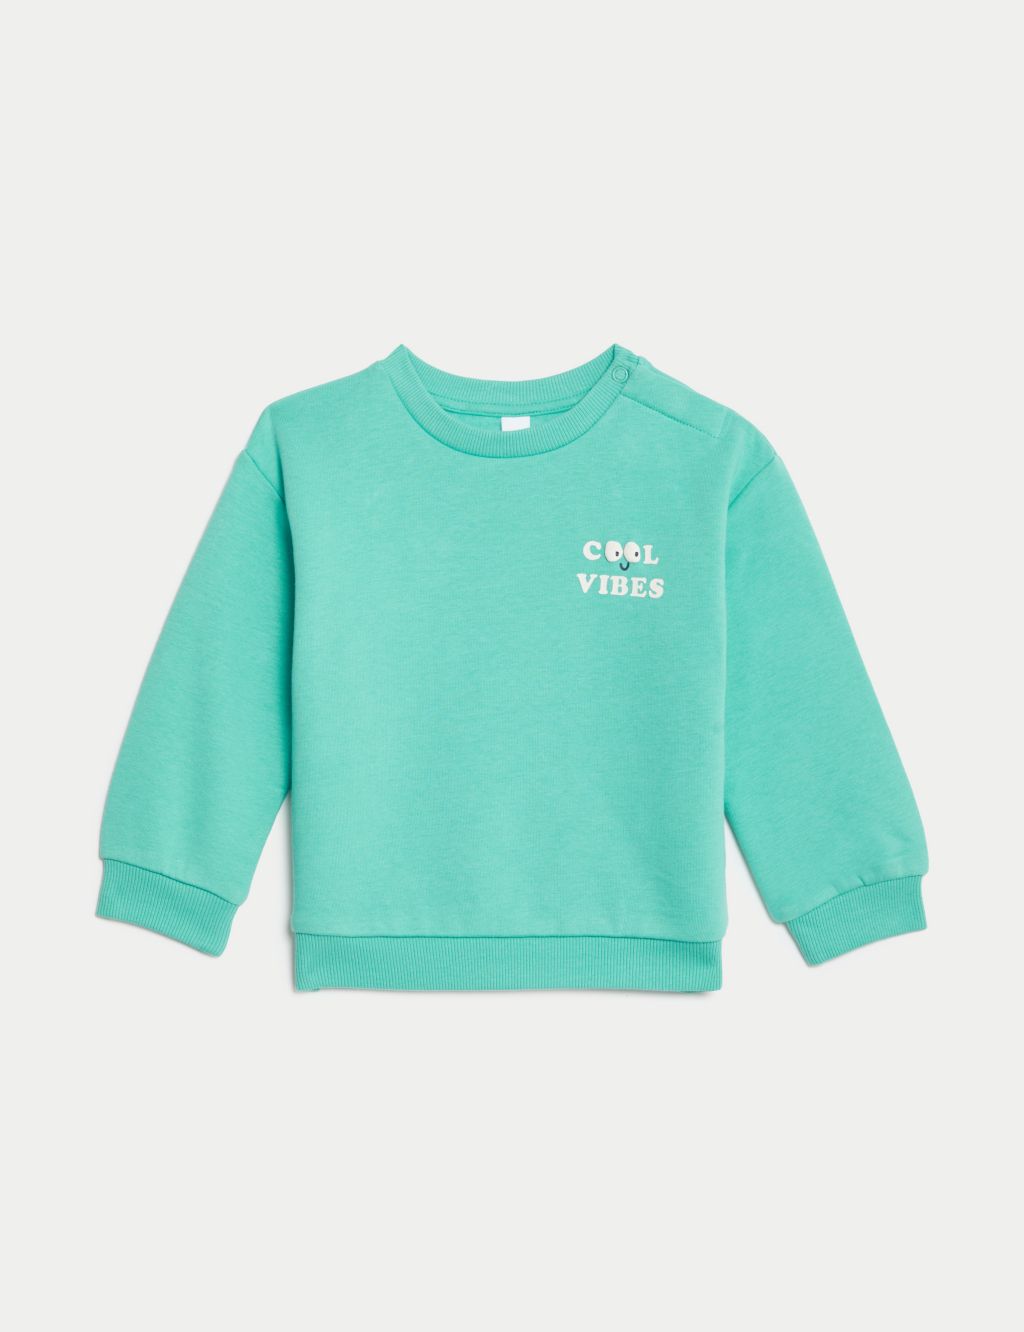 Cotton Rich Cool Vibes Slogan Sweatshirt (0-3 Yrs) image 1